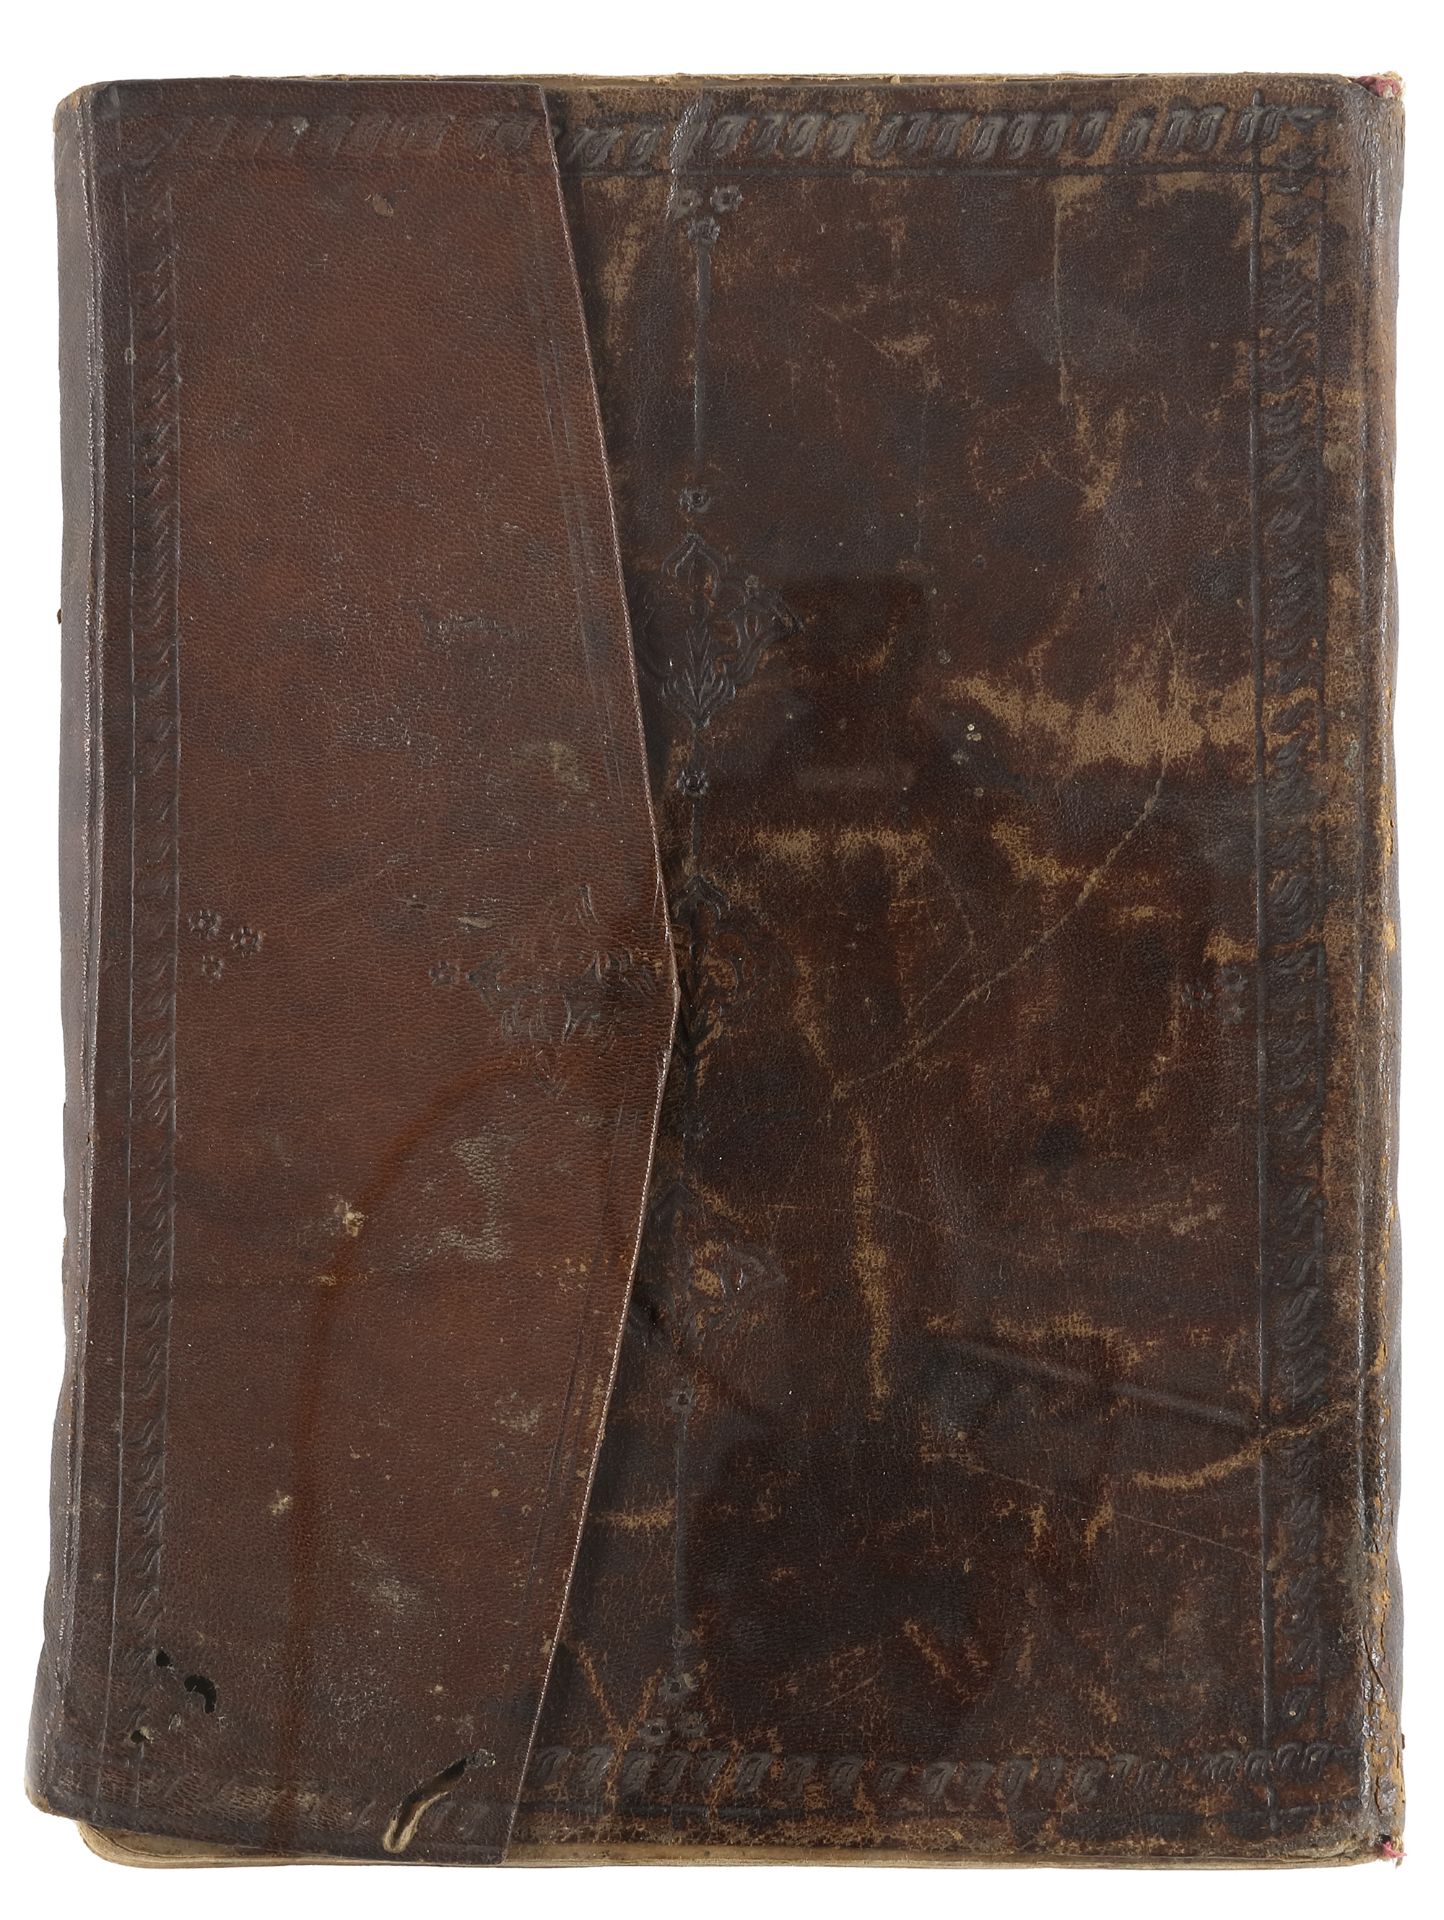 MAHMUD B. SAWANDAK B. HUSSEIN B. AMIN (D.1481), FADA’IL AL-BELAD AL-ARBA’A, A GUIDE TO MECCA, MEDINA - Image 2 of 4